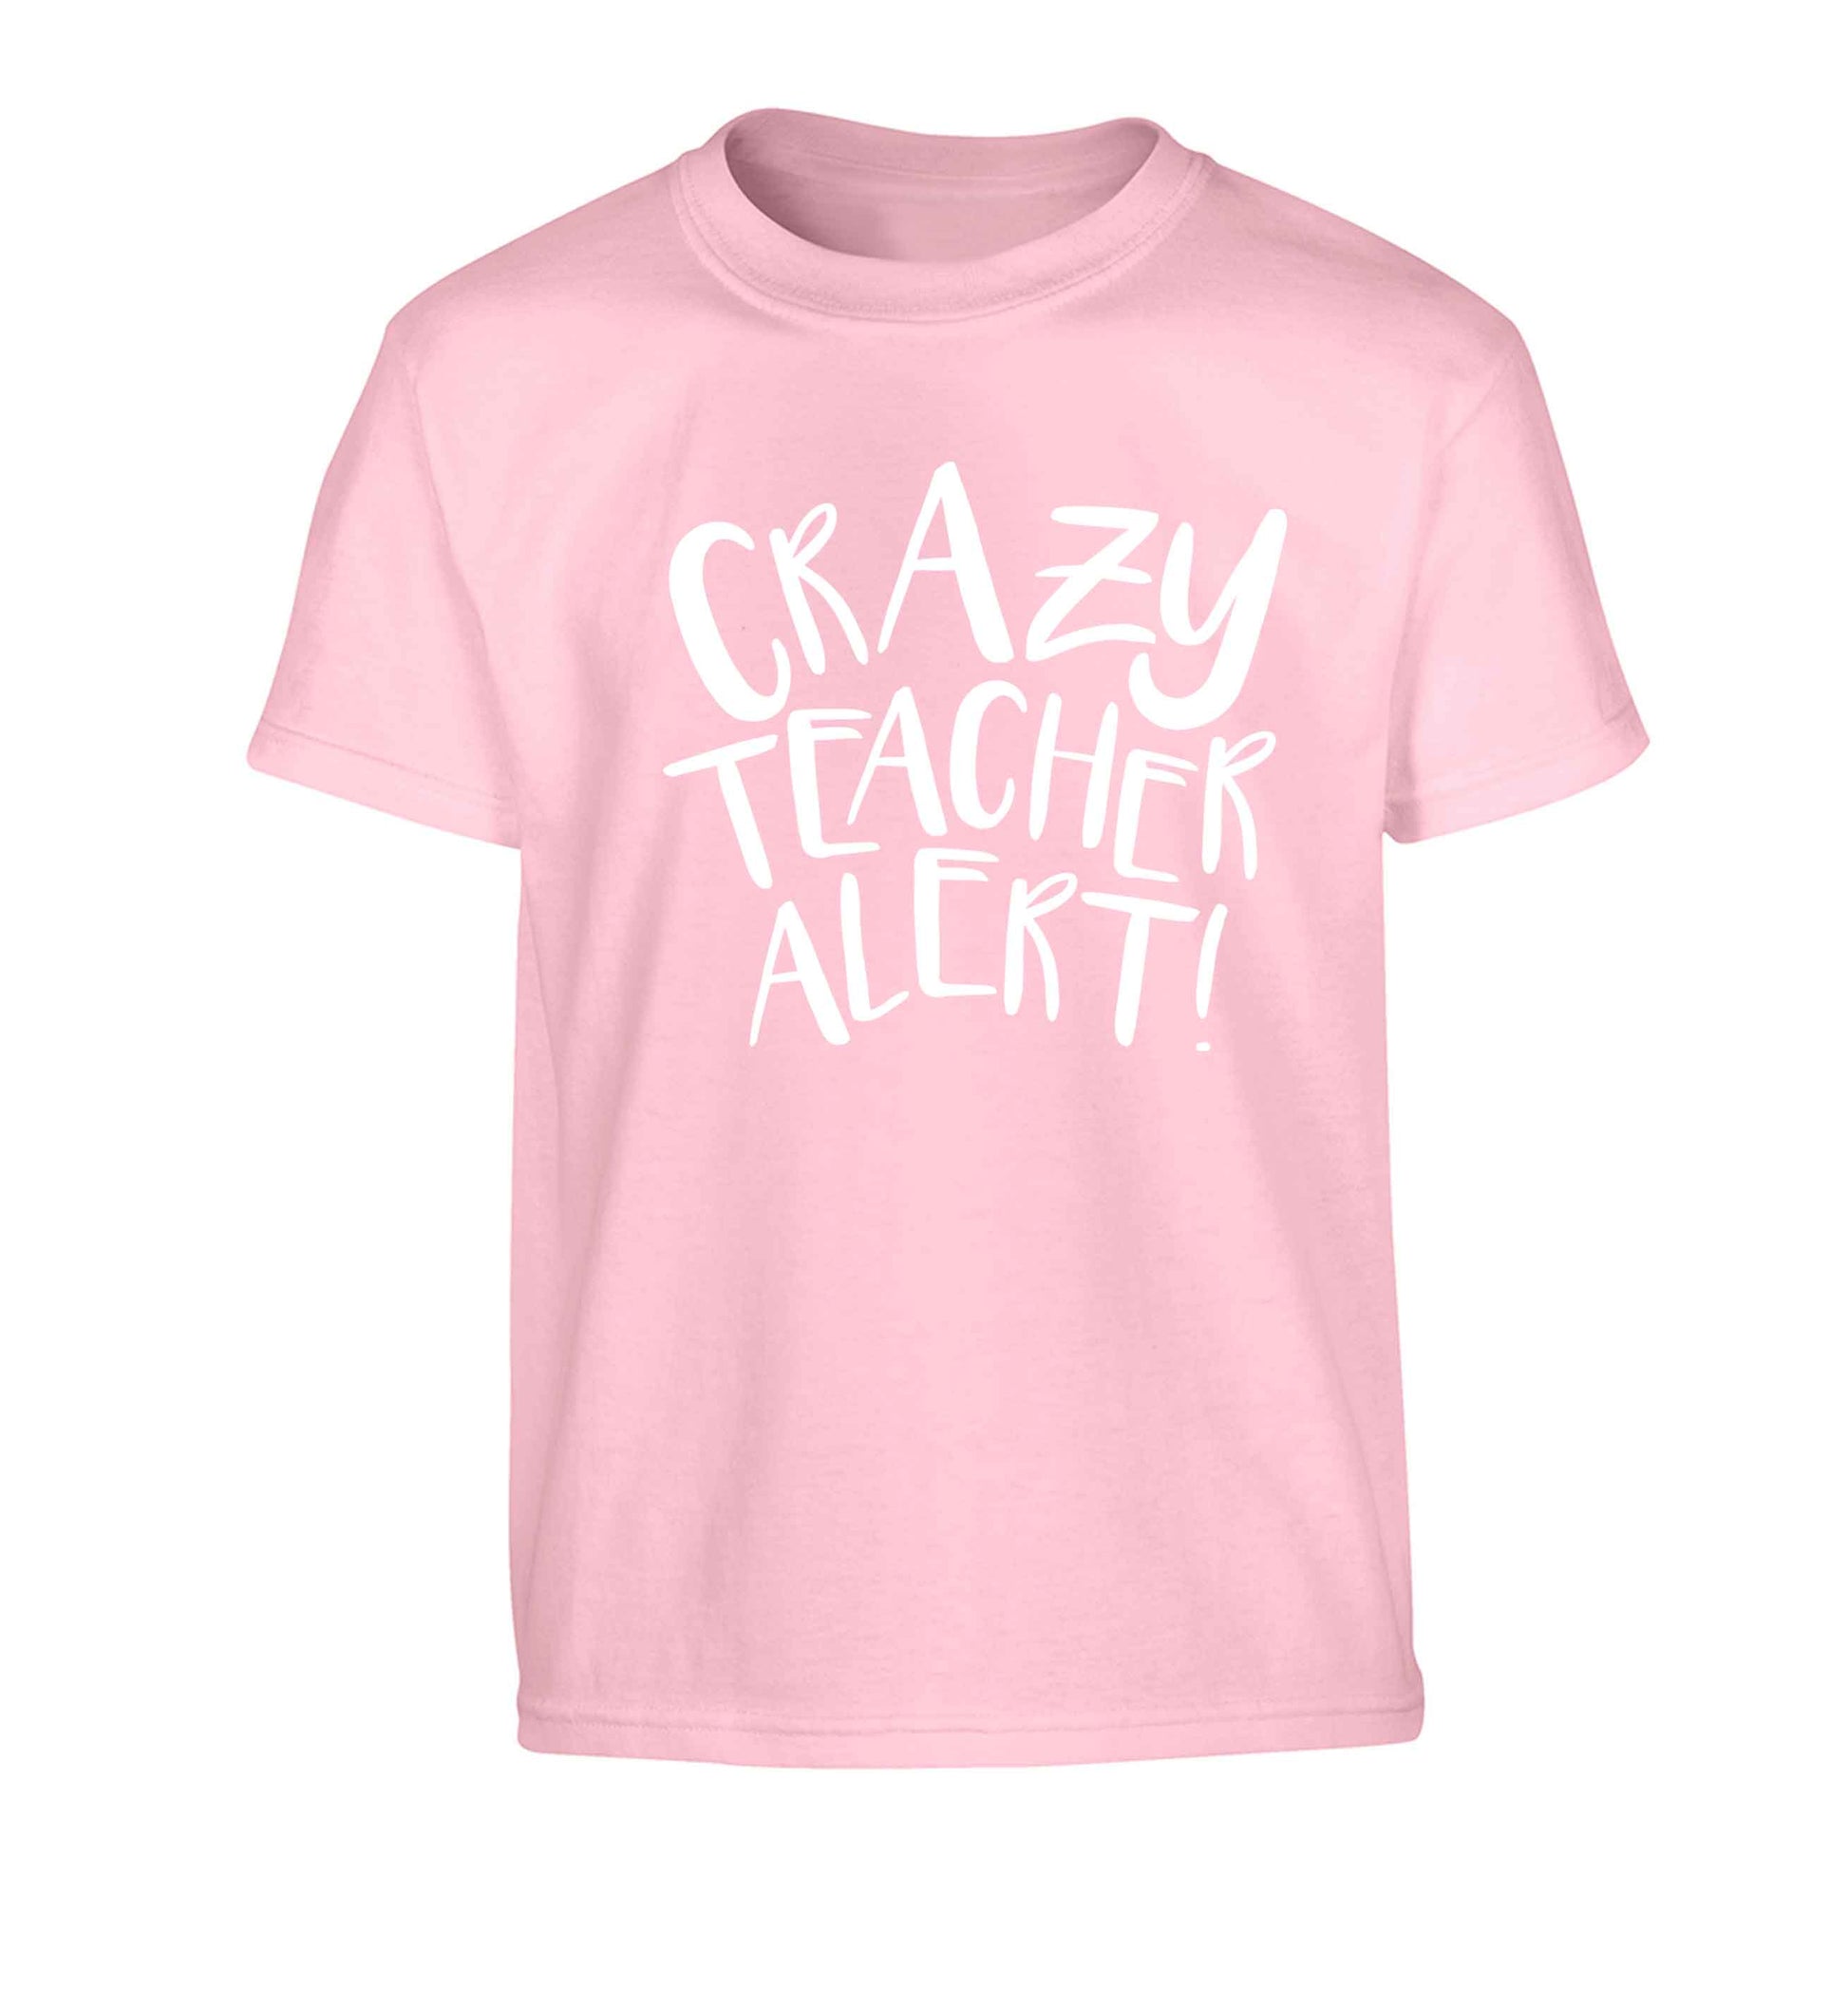 Crazy teacher alert Children's light pink Tshirt 12-13 Years